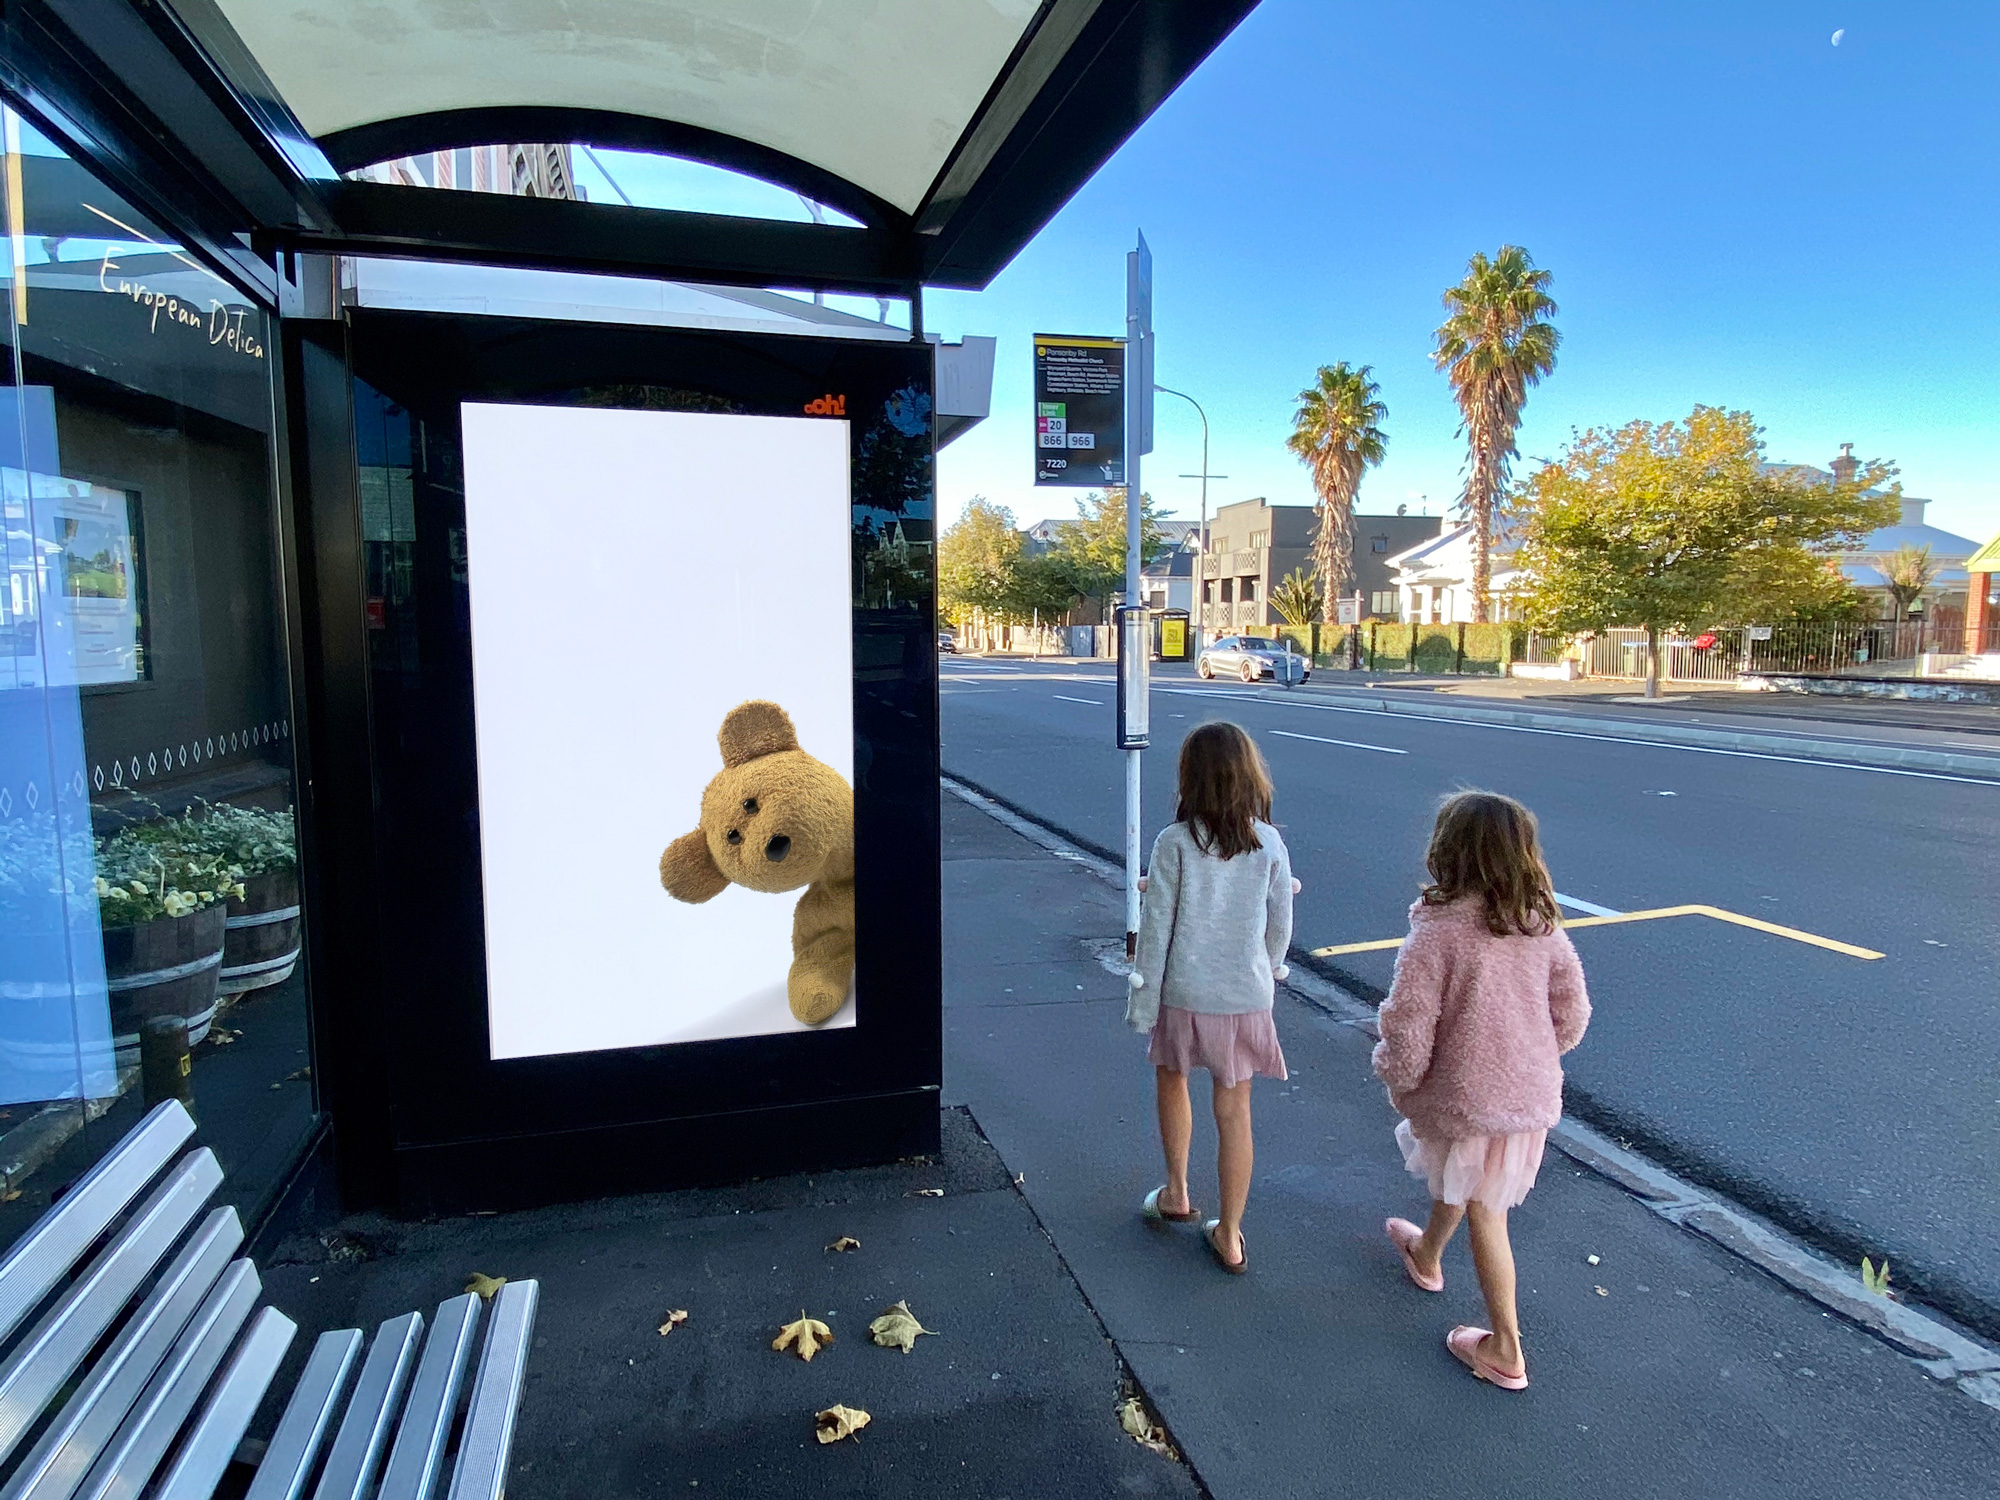 Teddy Bear Hunt street furniture advertising on bus shelter